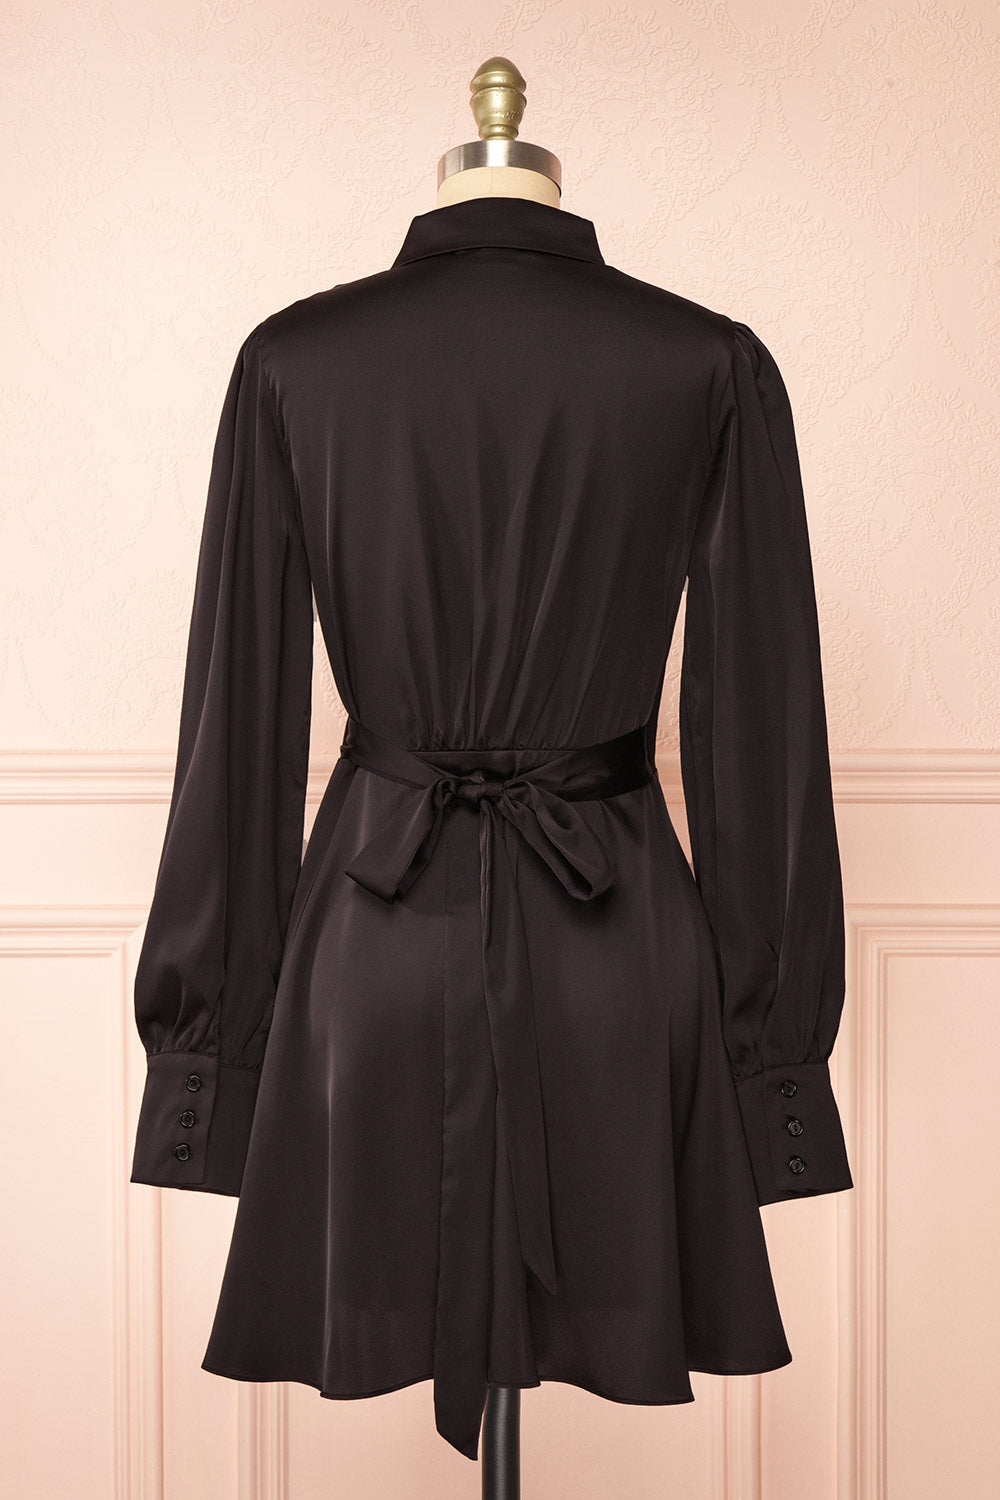 Felestine Black Short Satin Wrap Dress | Boutique 1861 back view